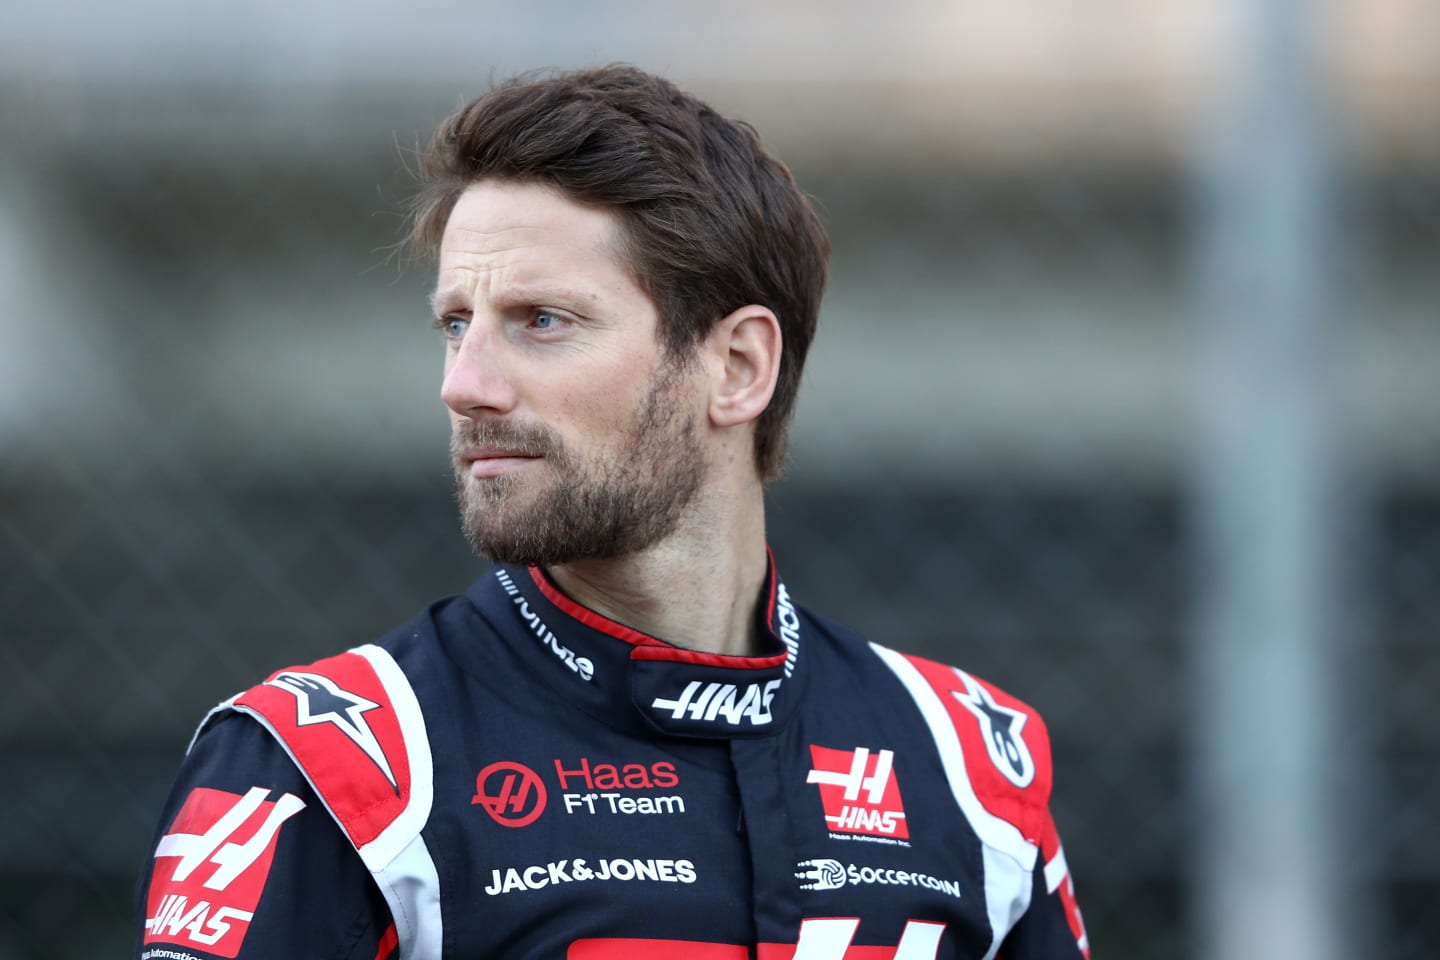 BARCELONA, SPAIN - FEBRUARY 19: Romain Grosjean of France and Haas F1 looks on as drivers line up